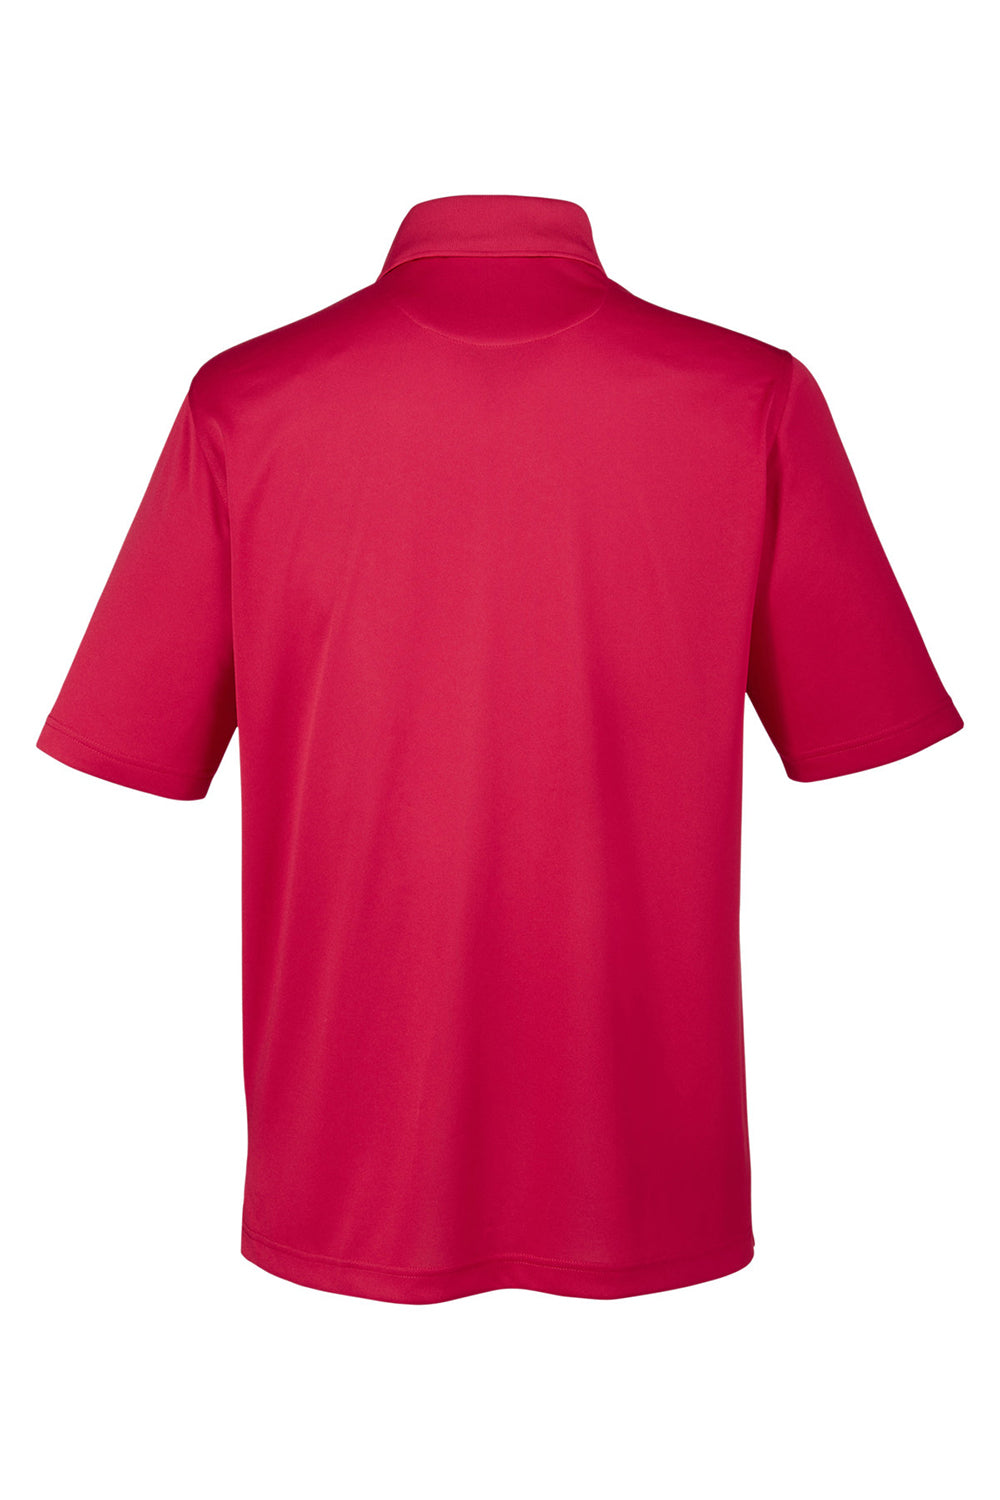 Harriton M348P Mens Advantage Performance Moisture Wicking Short Sleeve Polo Shirt w/ Pocket Red Flat Back